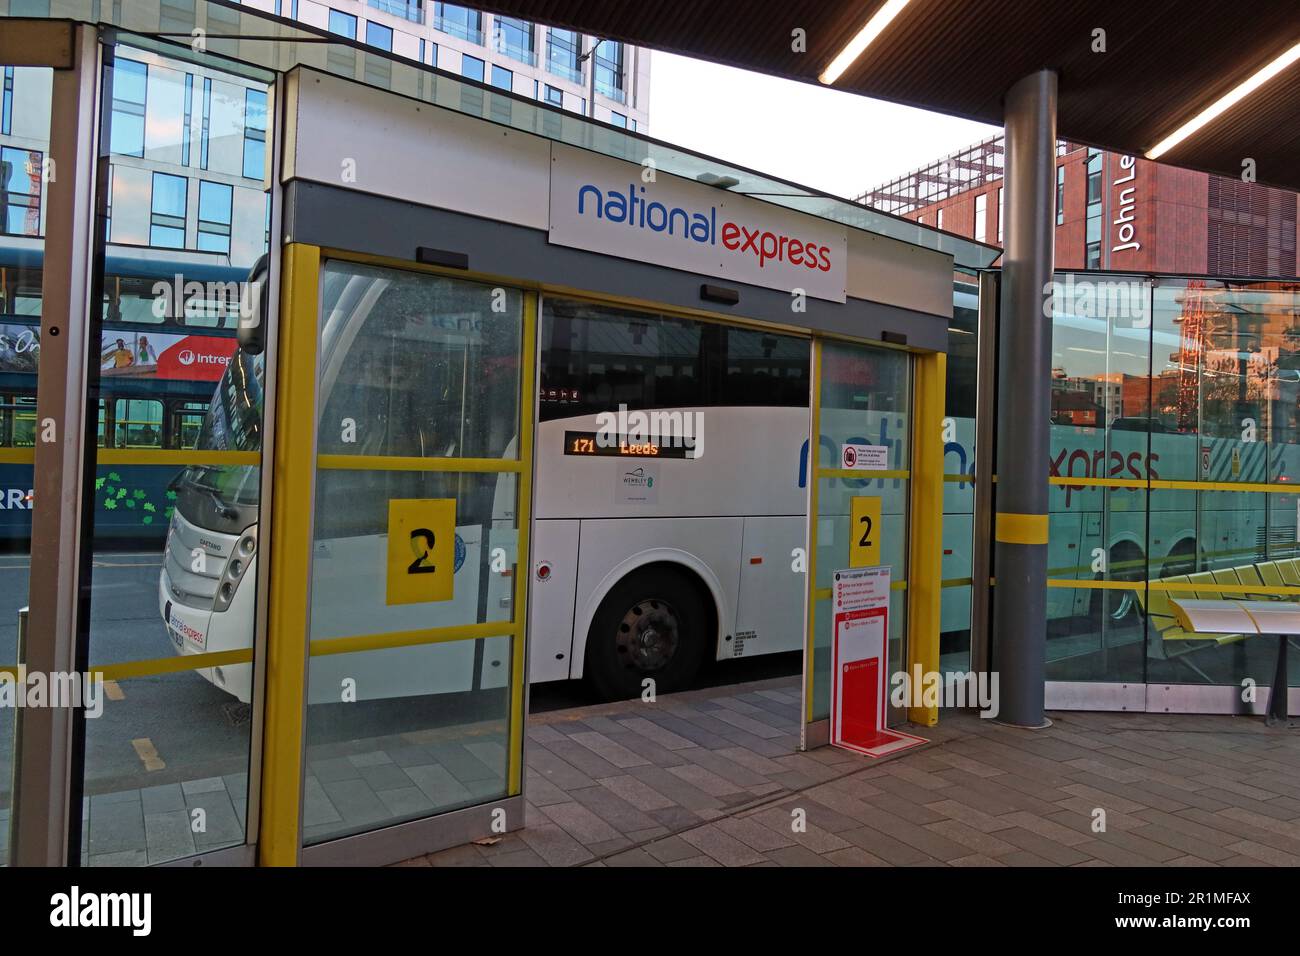 Service de bus interurbain National Express stand 2, service Leeds, à la gare routière Liverpool ONE, Paradise St, Liverpool, Merseyside, Angleterre,L1 3EU Banque D'Images